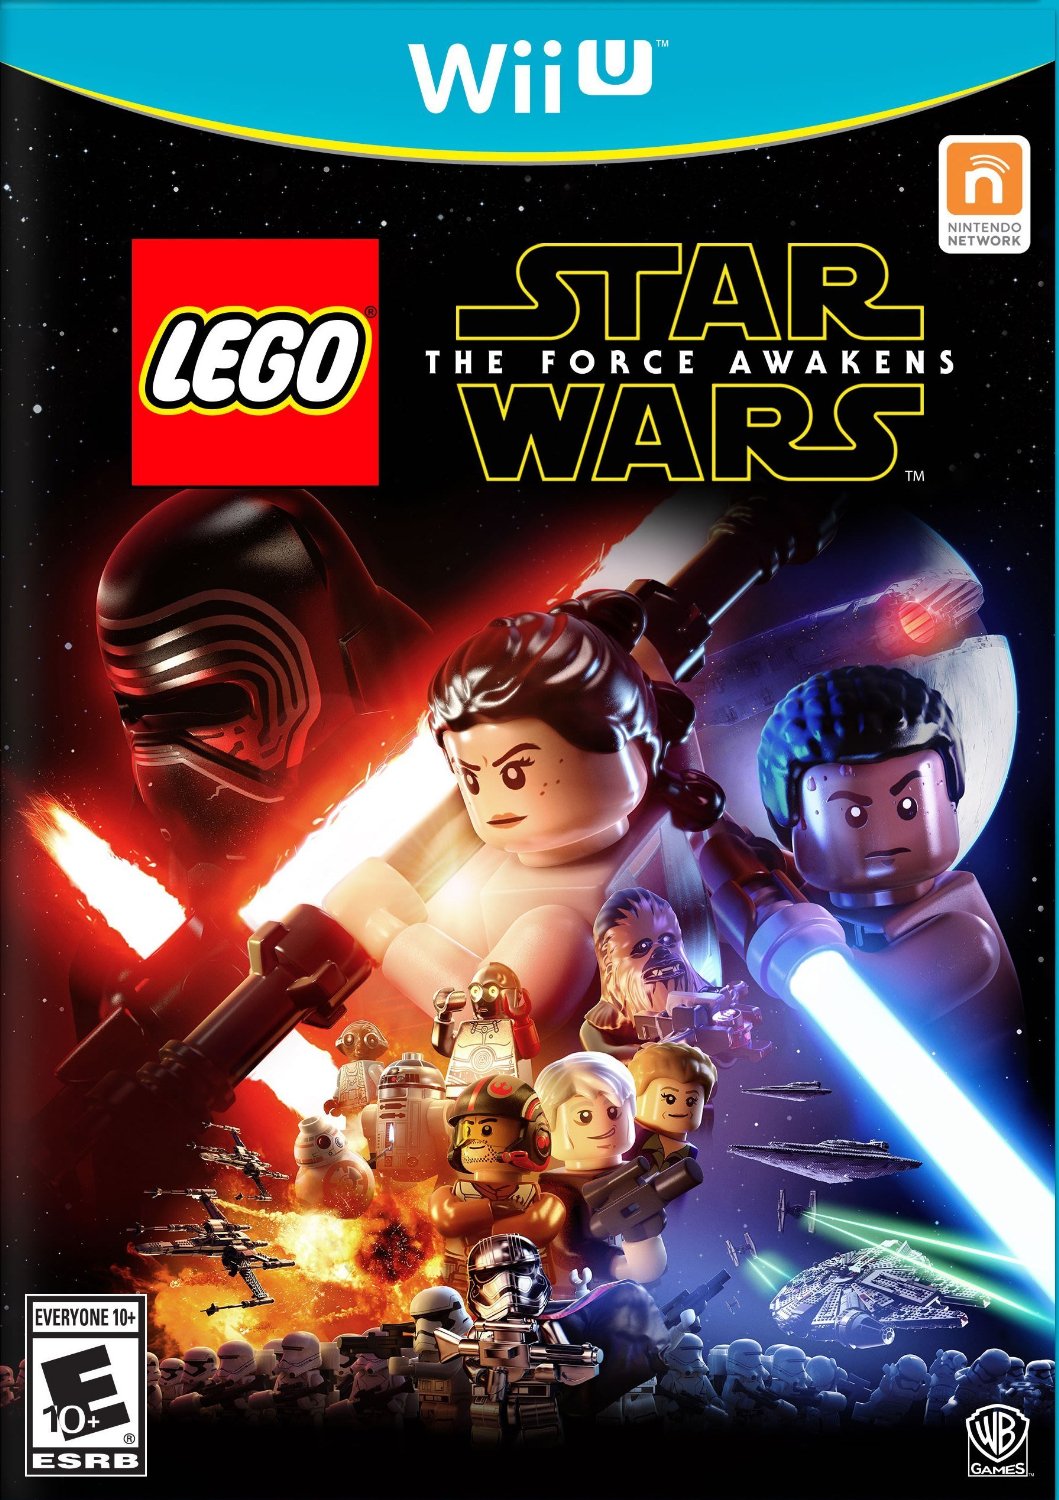 Amazon: LEGO Star Wars The Force Awakens – Wii U Standard Edition Only $29.99! (Reg $49.99)